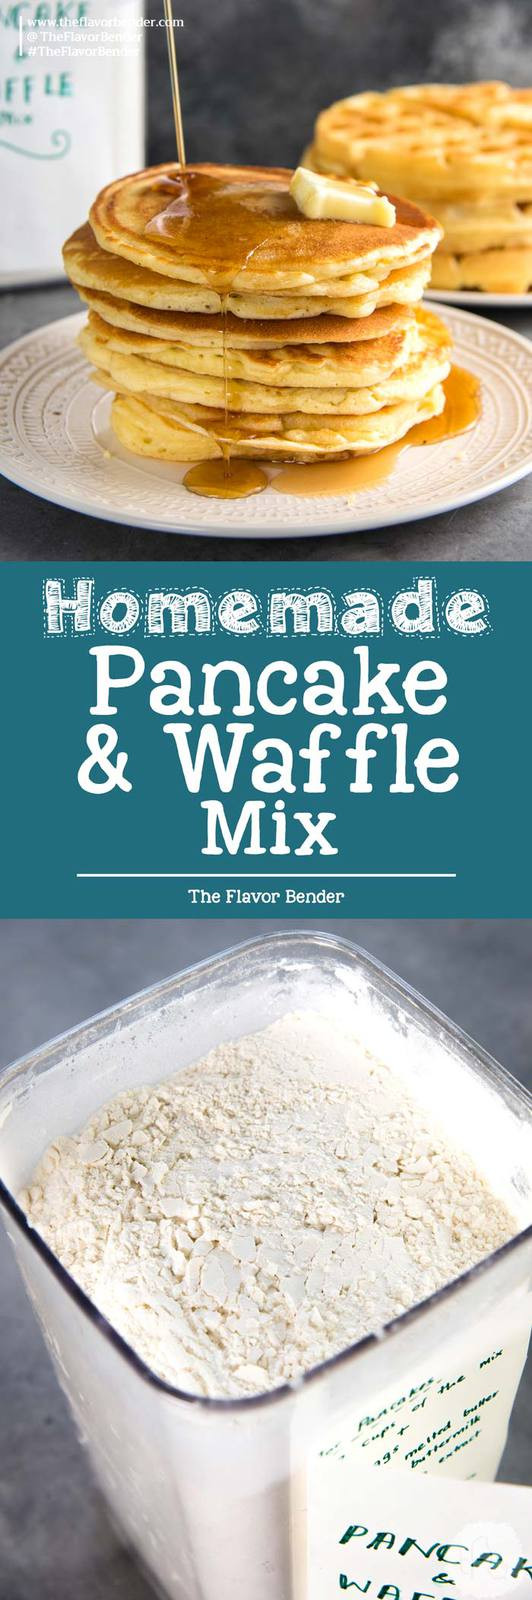 Best ideas about DIY Pancake Mix
. Save or Pin Homemade Pancake Mix or Homemade Waffle Mix Now.